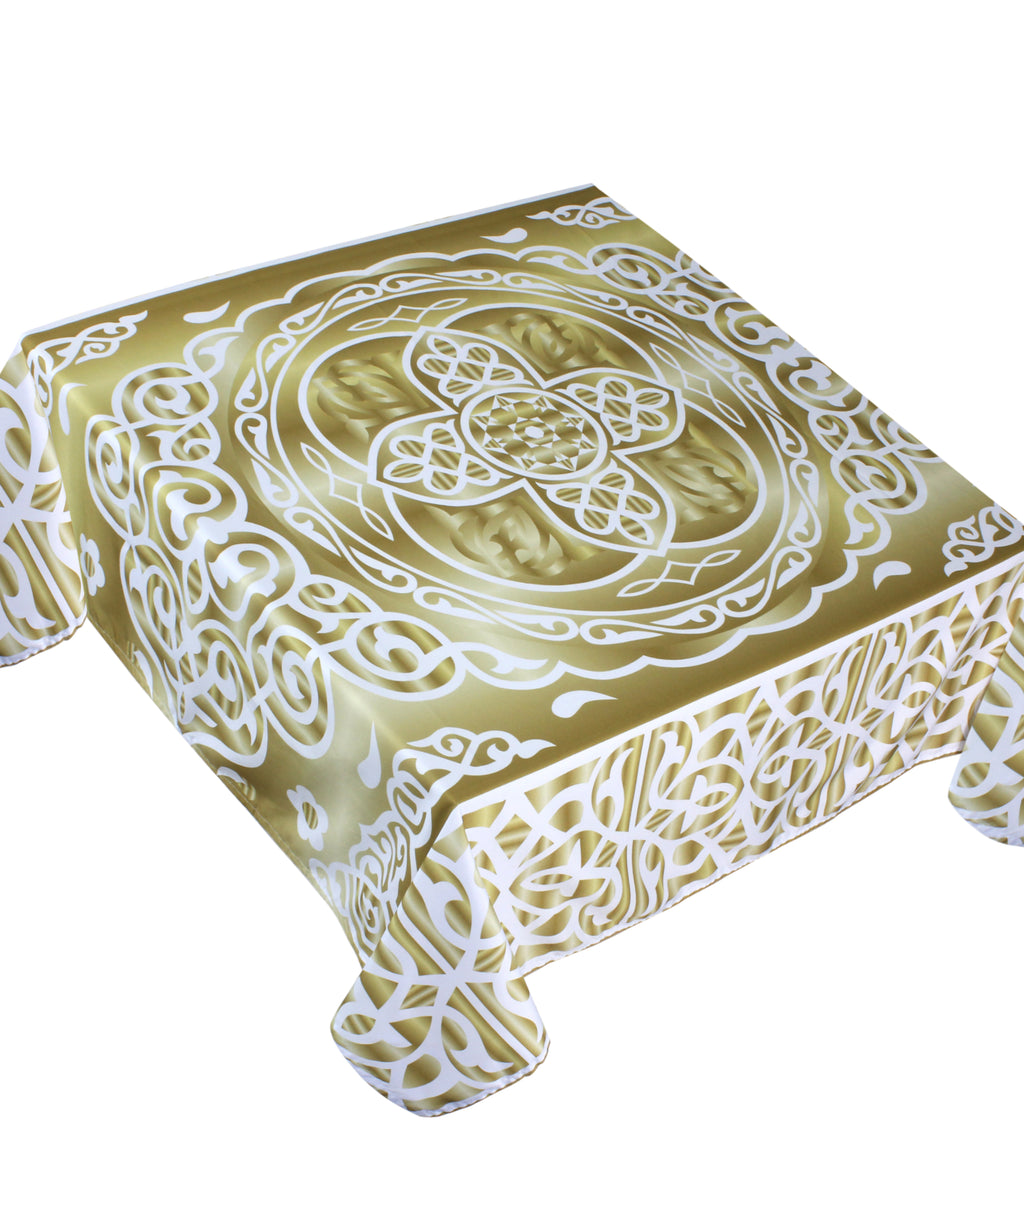 The Golden khayameya table cover